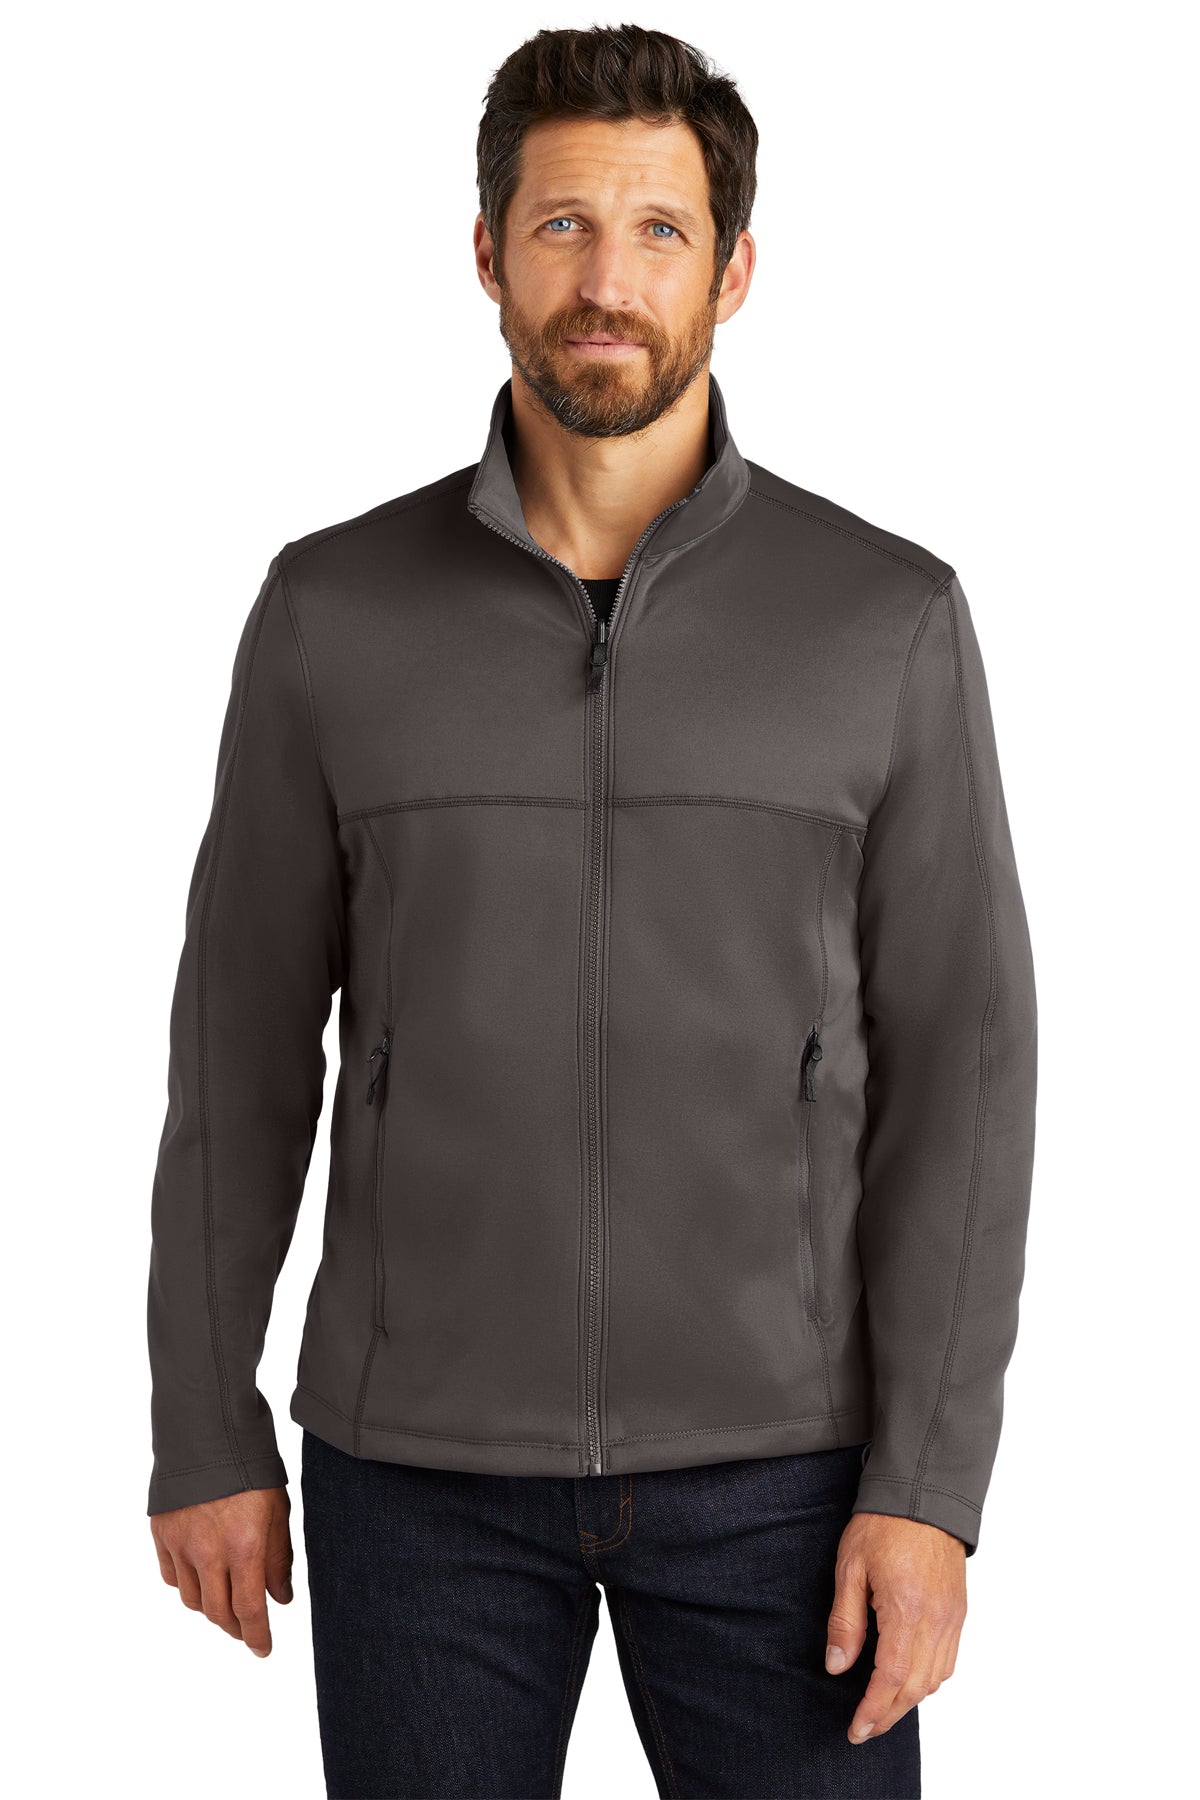 MEDSTAR F904 Port Authority ® Collective Smooth Fleece Jacket